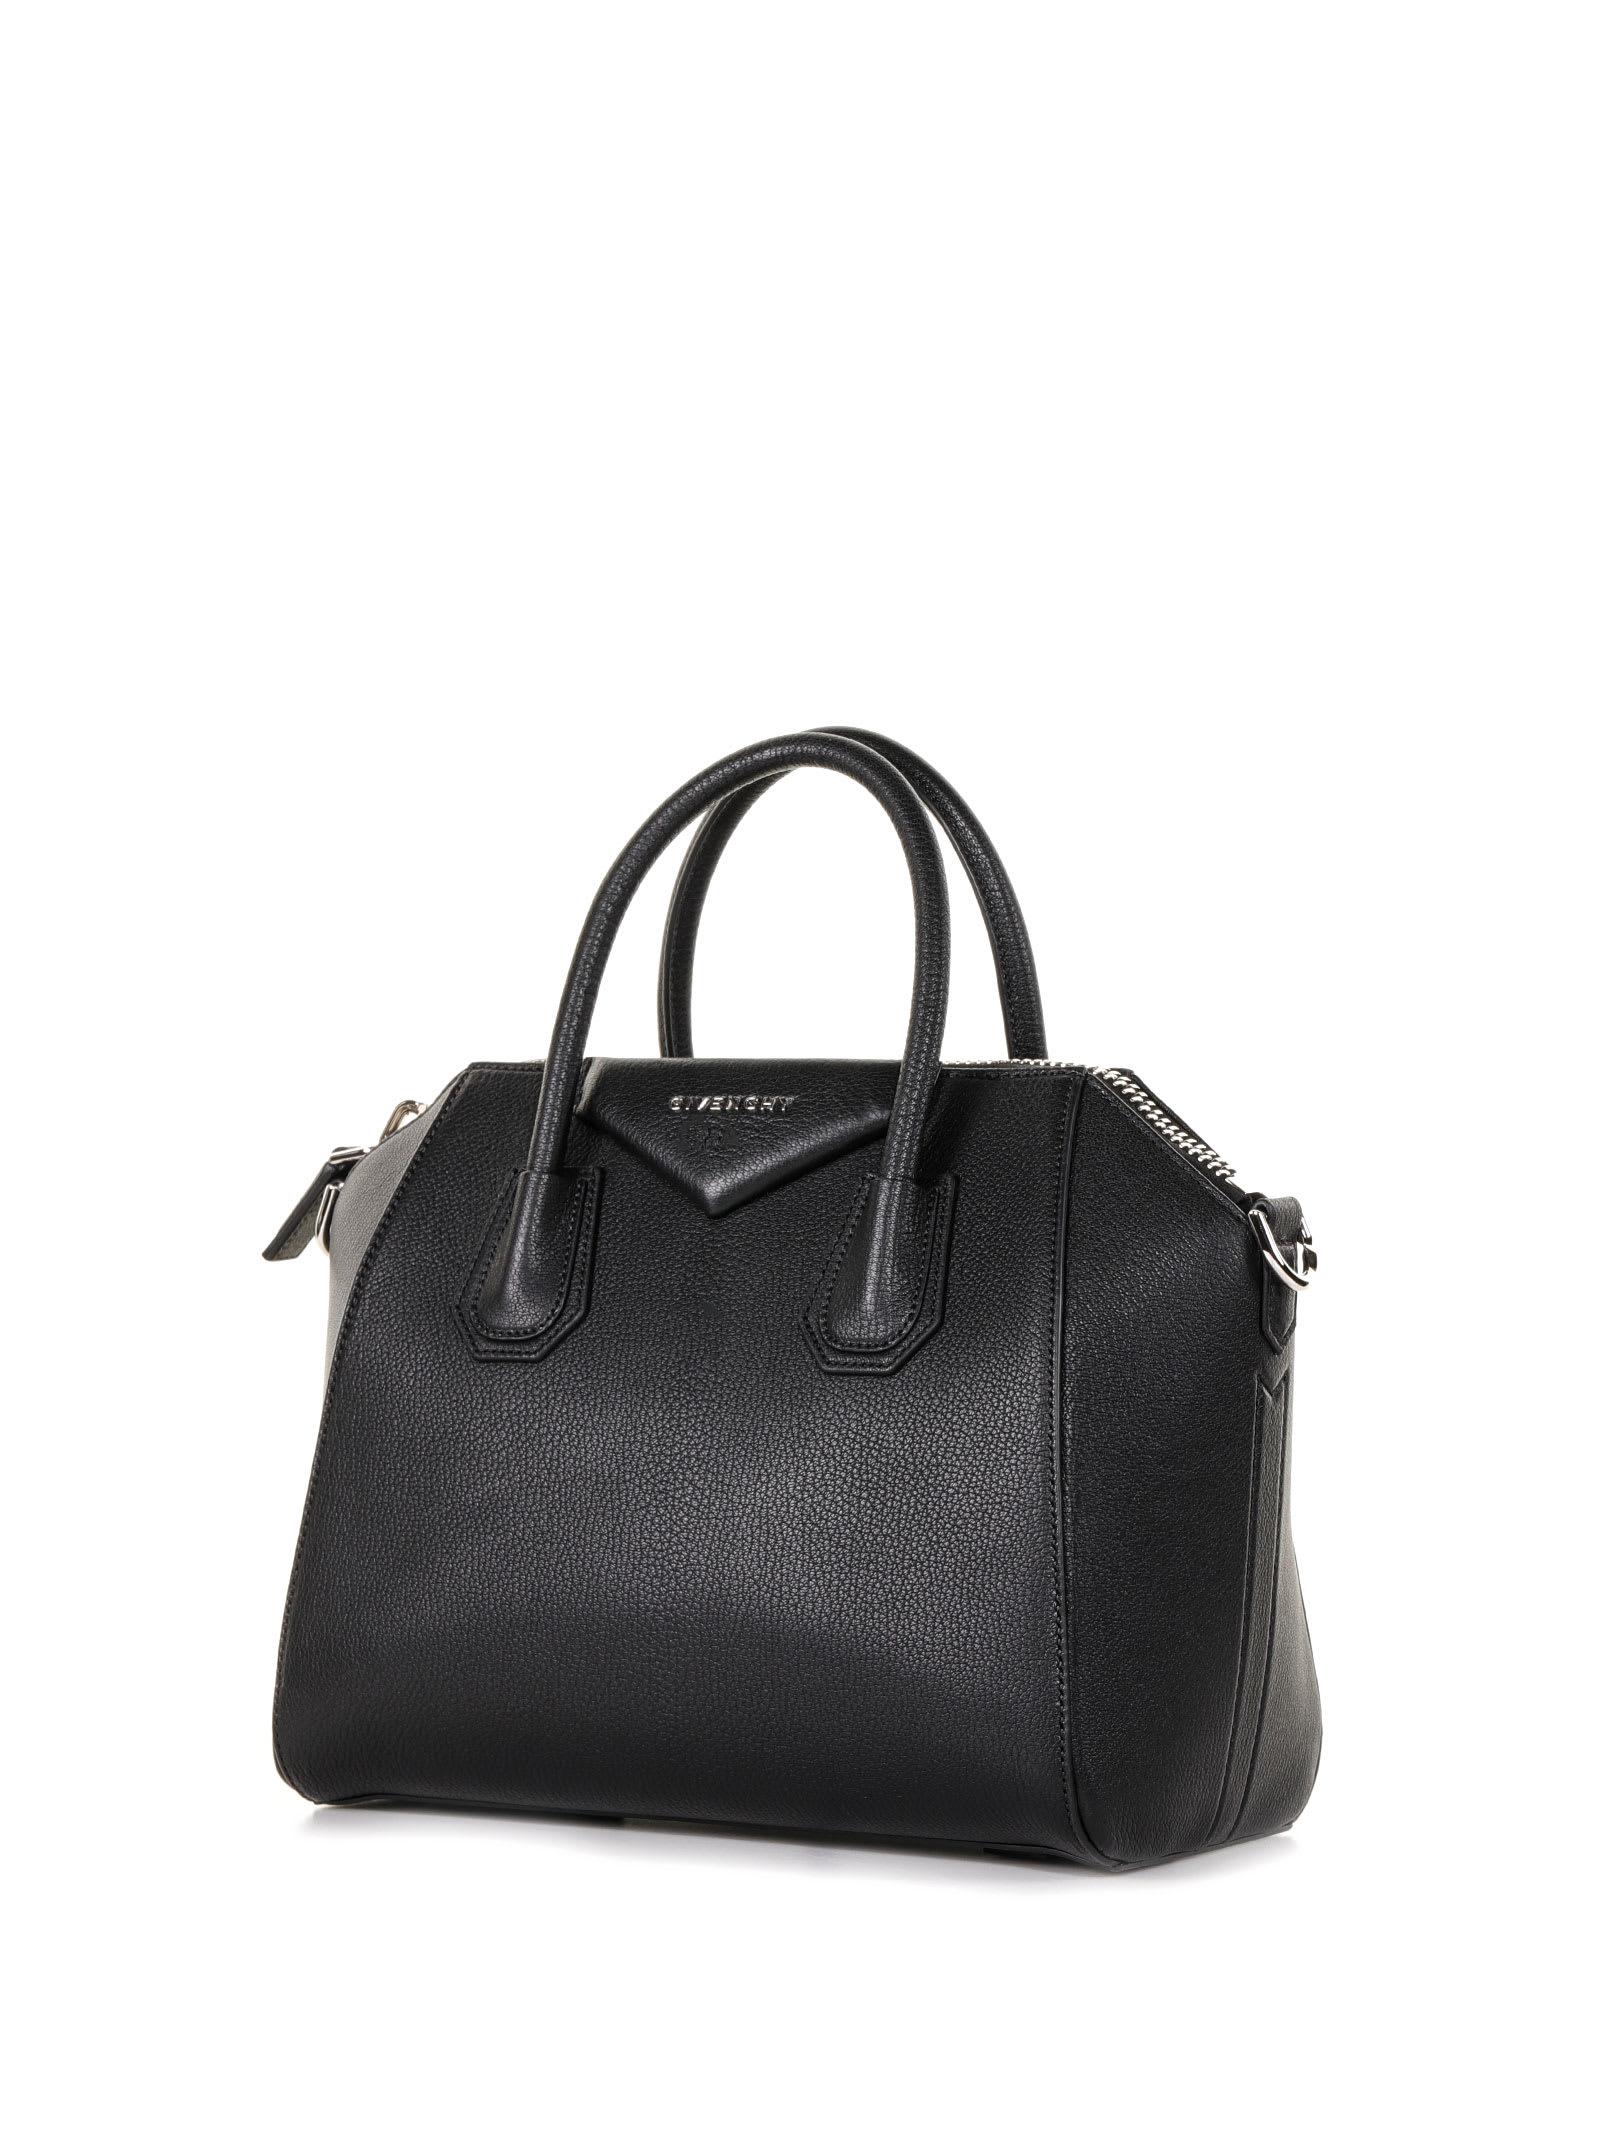 Givenchy Small Antigona Bag With Shoulder Strap in Black